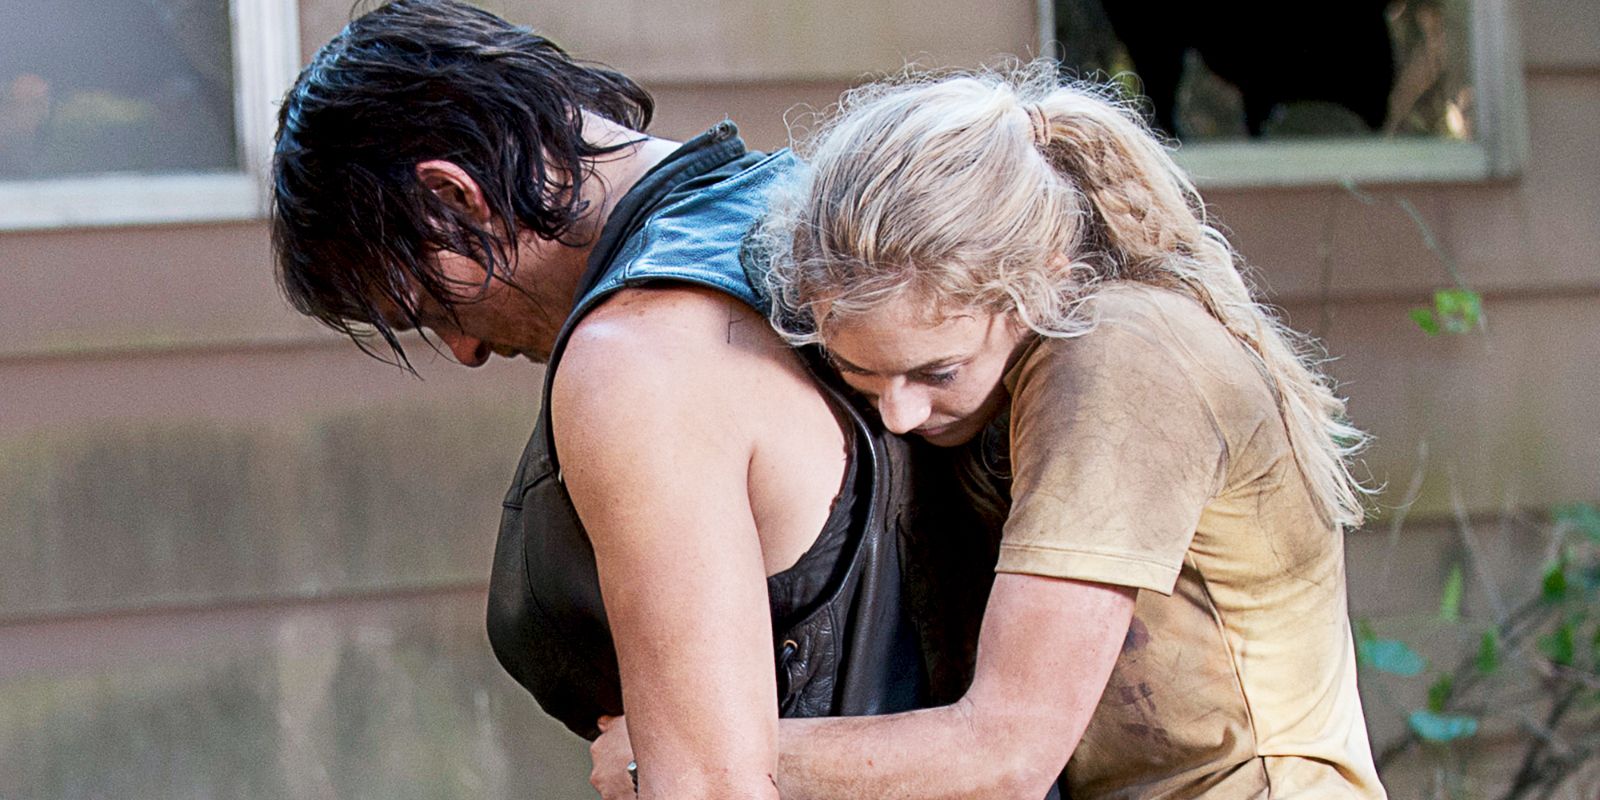 Beth hugging Daryl in The Walking Dead. 